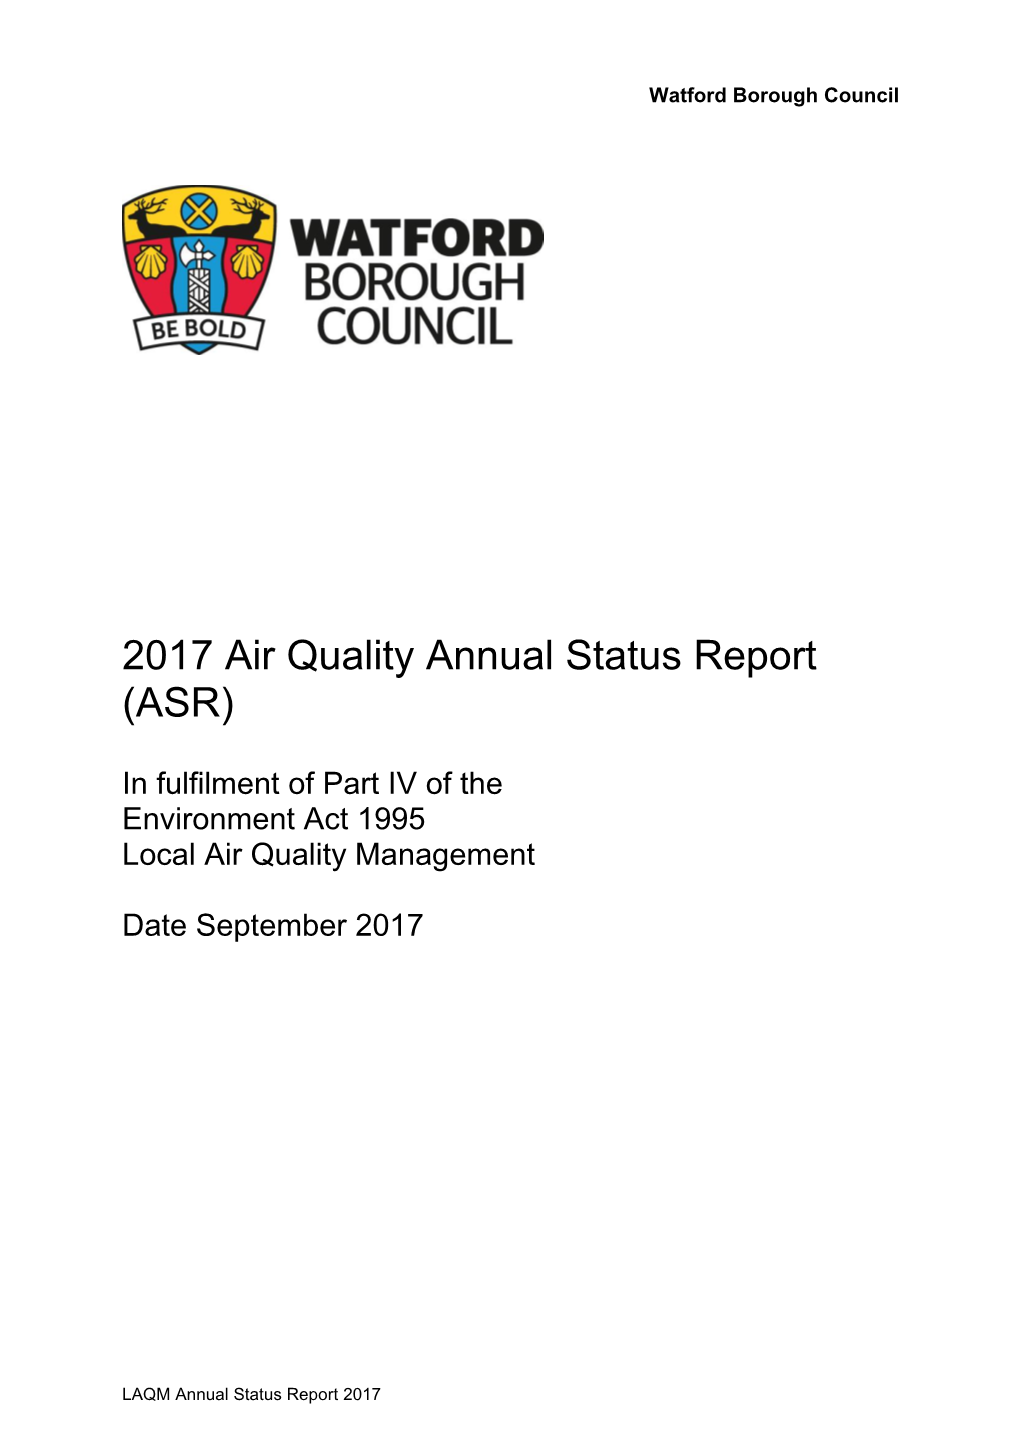 Annual Status Report 2017 Watford Borough Council